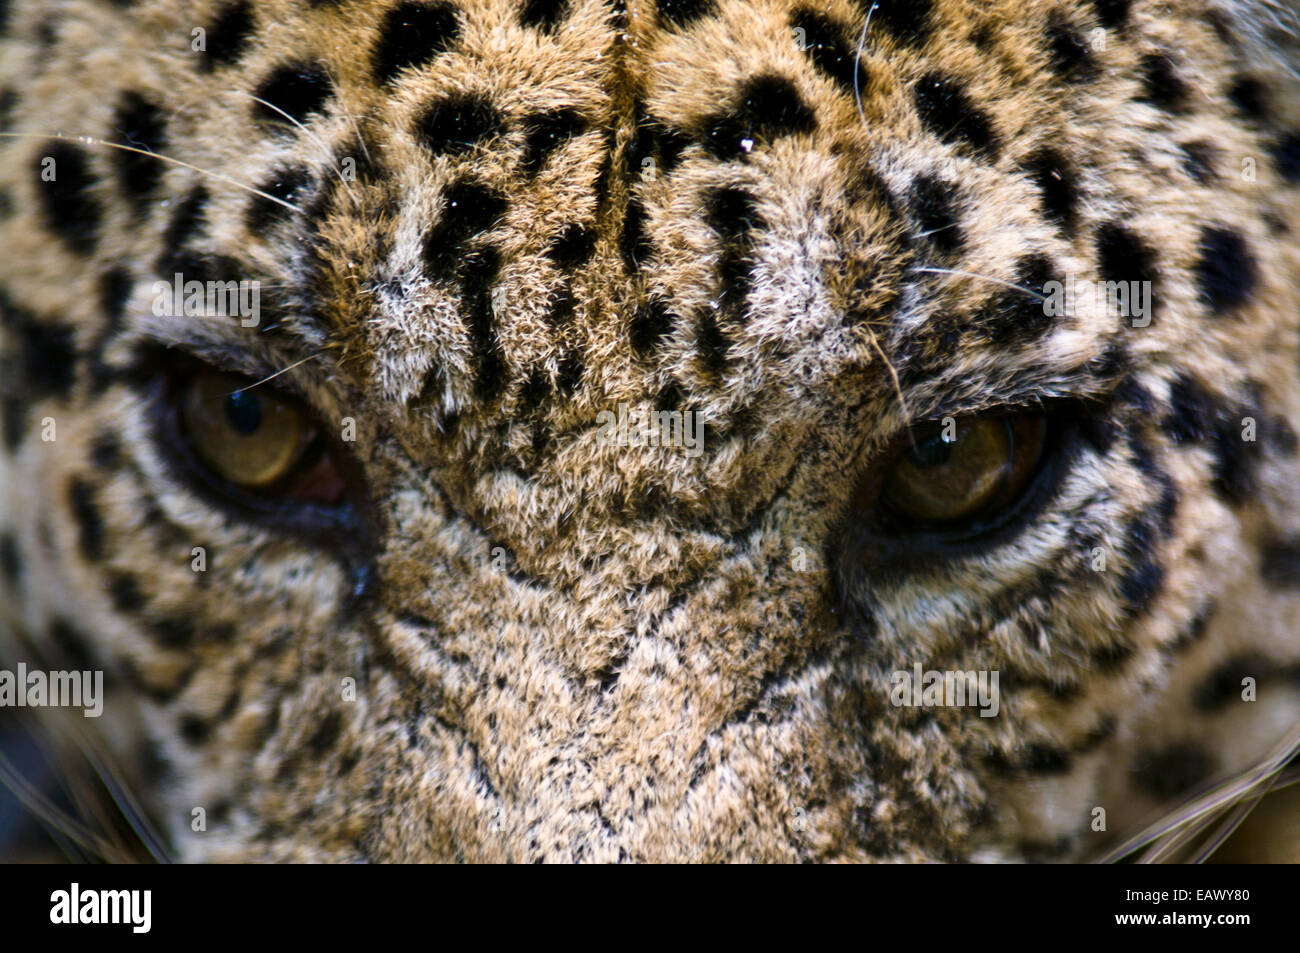 The menacing stare of a Jaguar, the top predator of the Amazon rainforest. Stock Photo